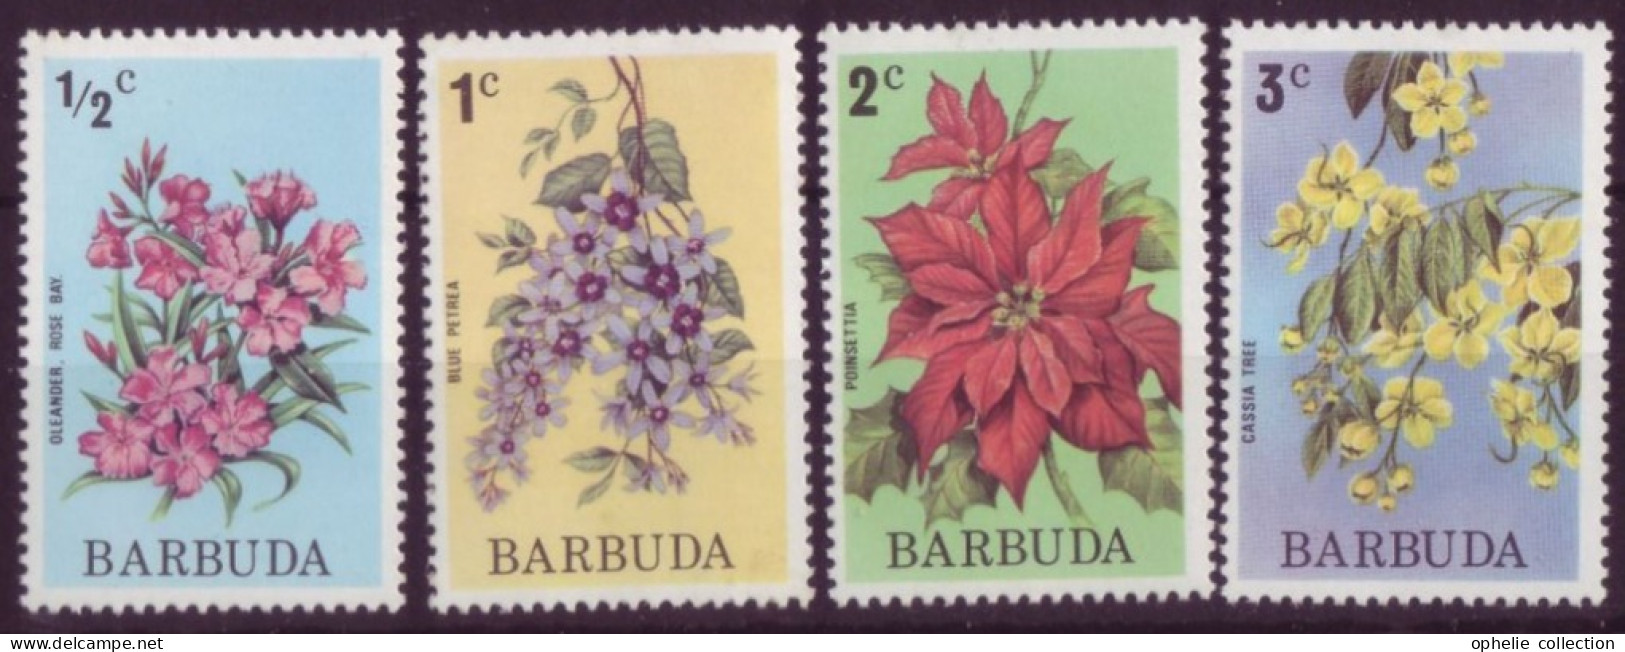 Amérique - Barbuda - Flore - 4 Timbres Différents - 7335 - Barbades (1966-...)